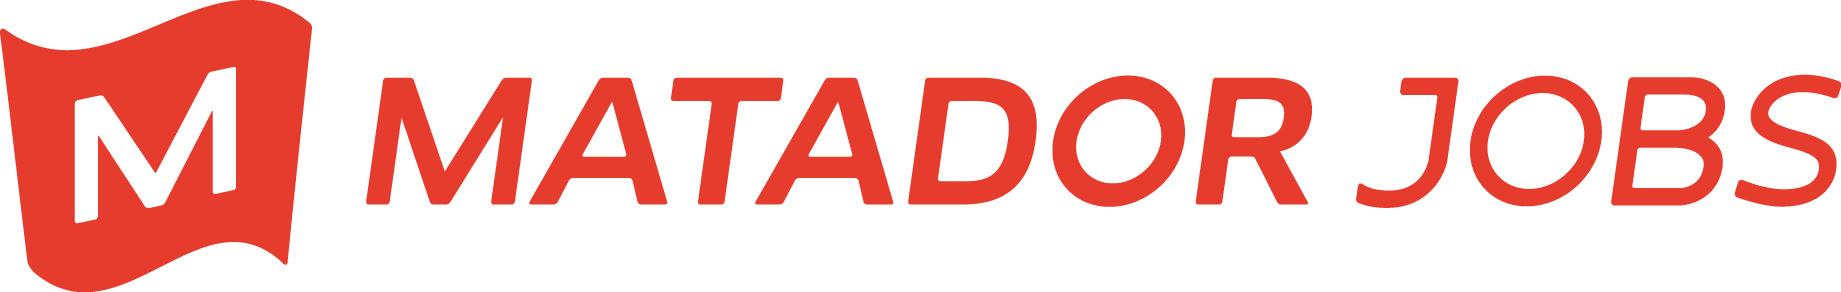 matador-jobs-logo-red-rgb